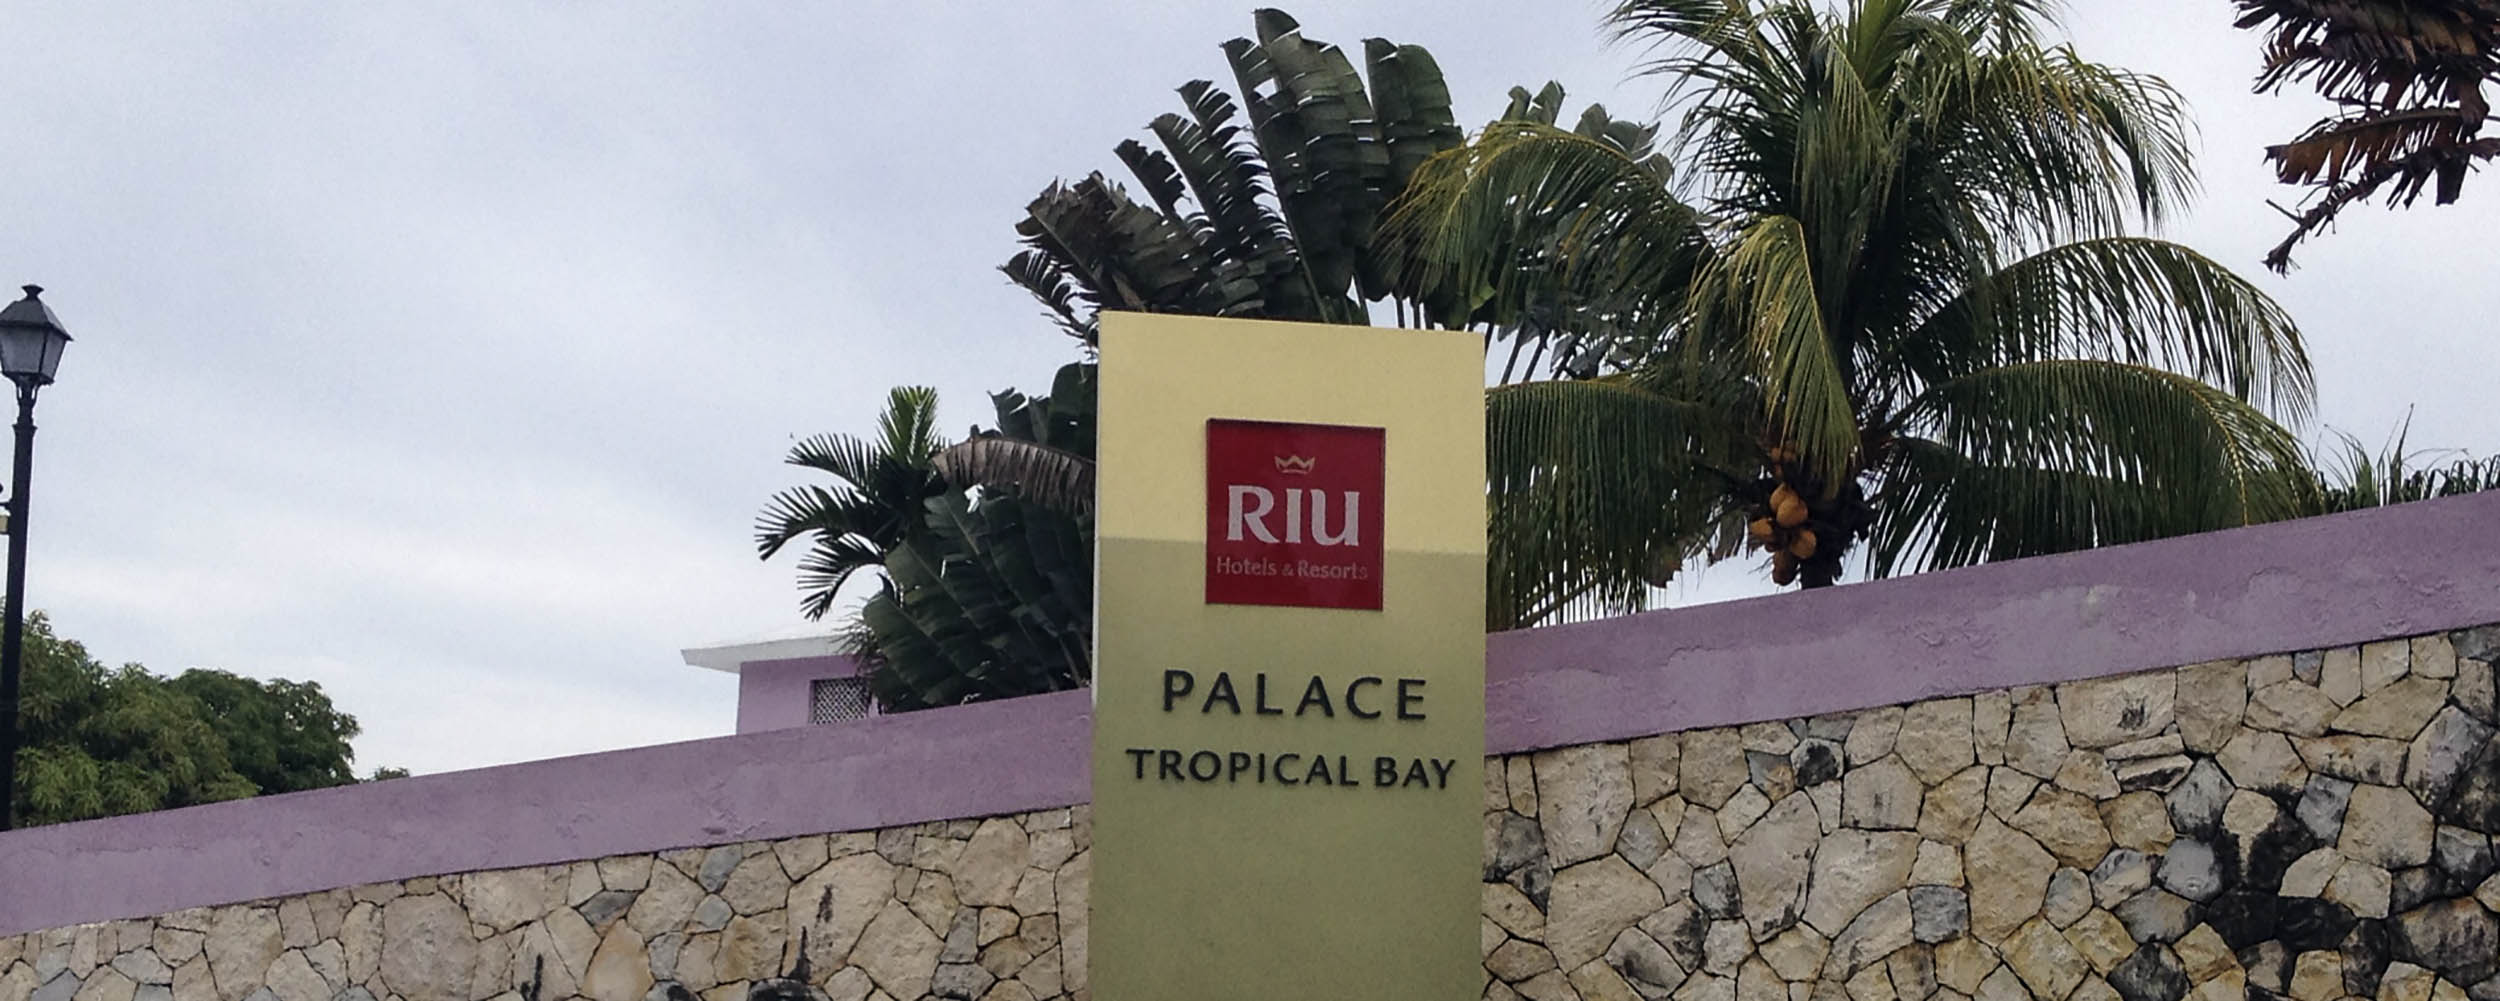 Palace Tropical Bay RIU - Negril Jamaica